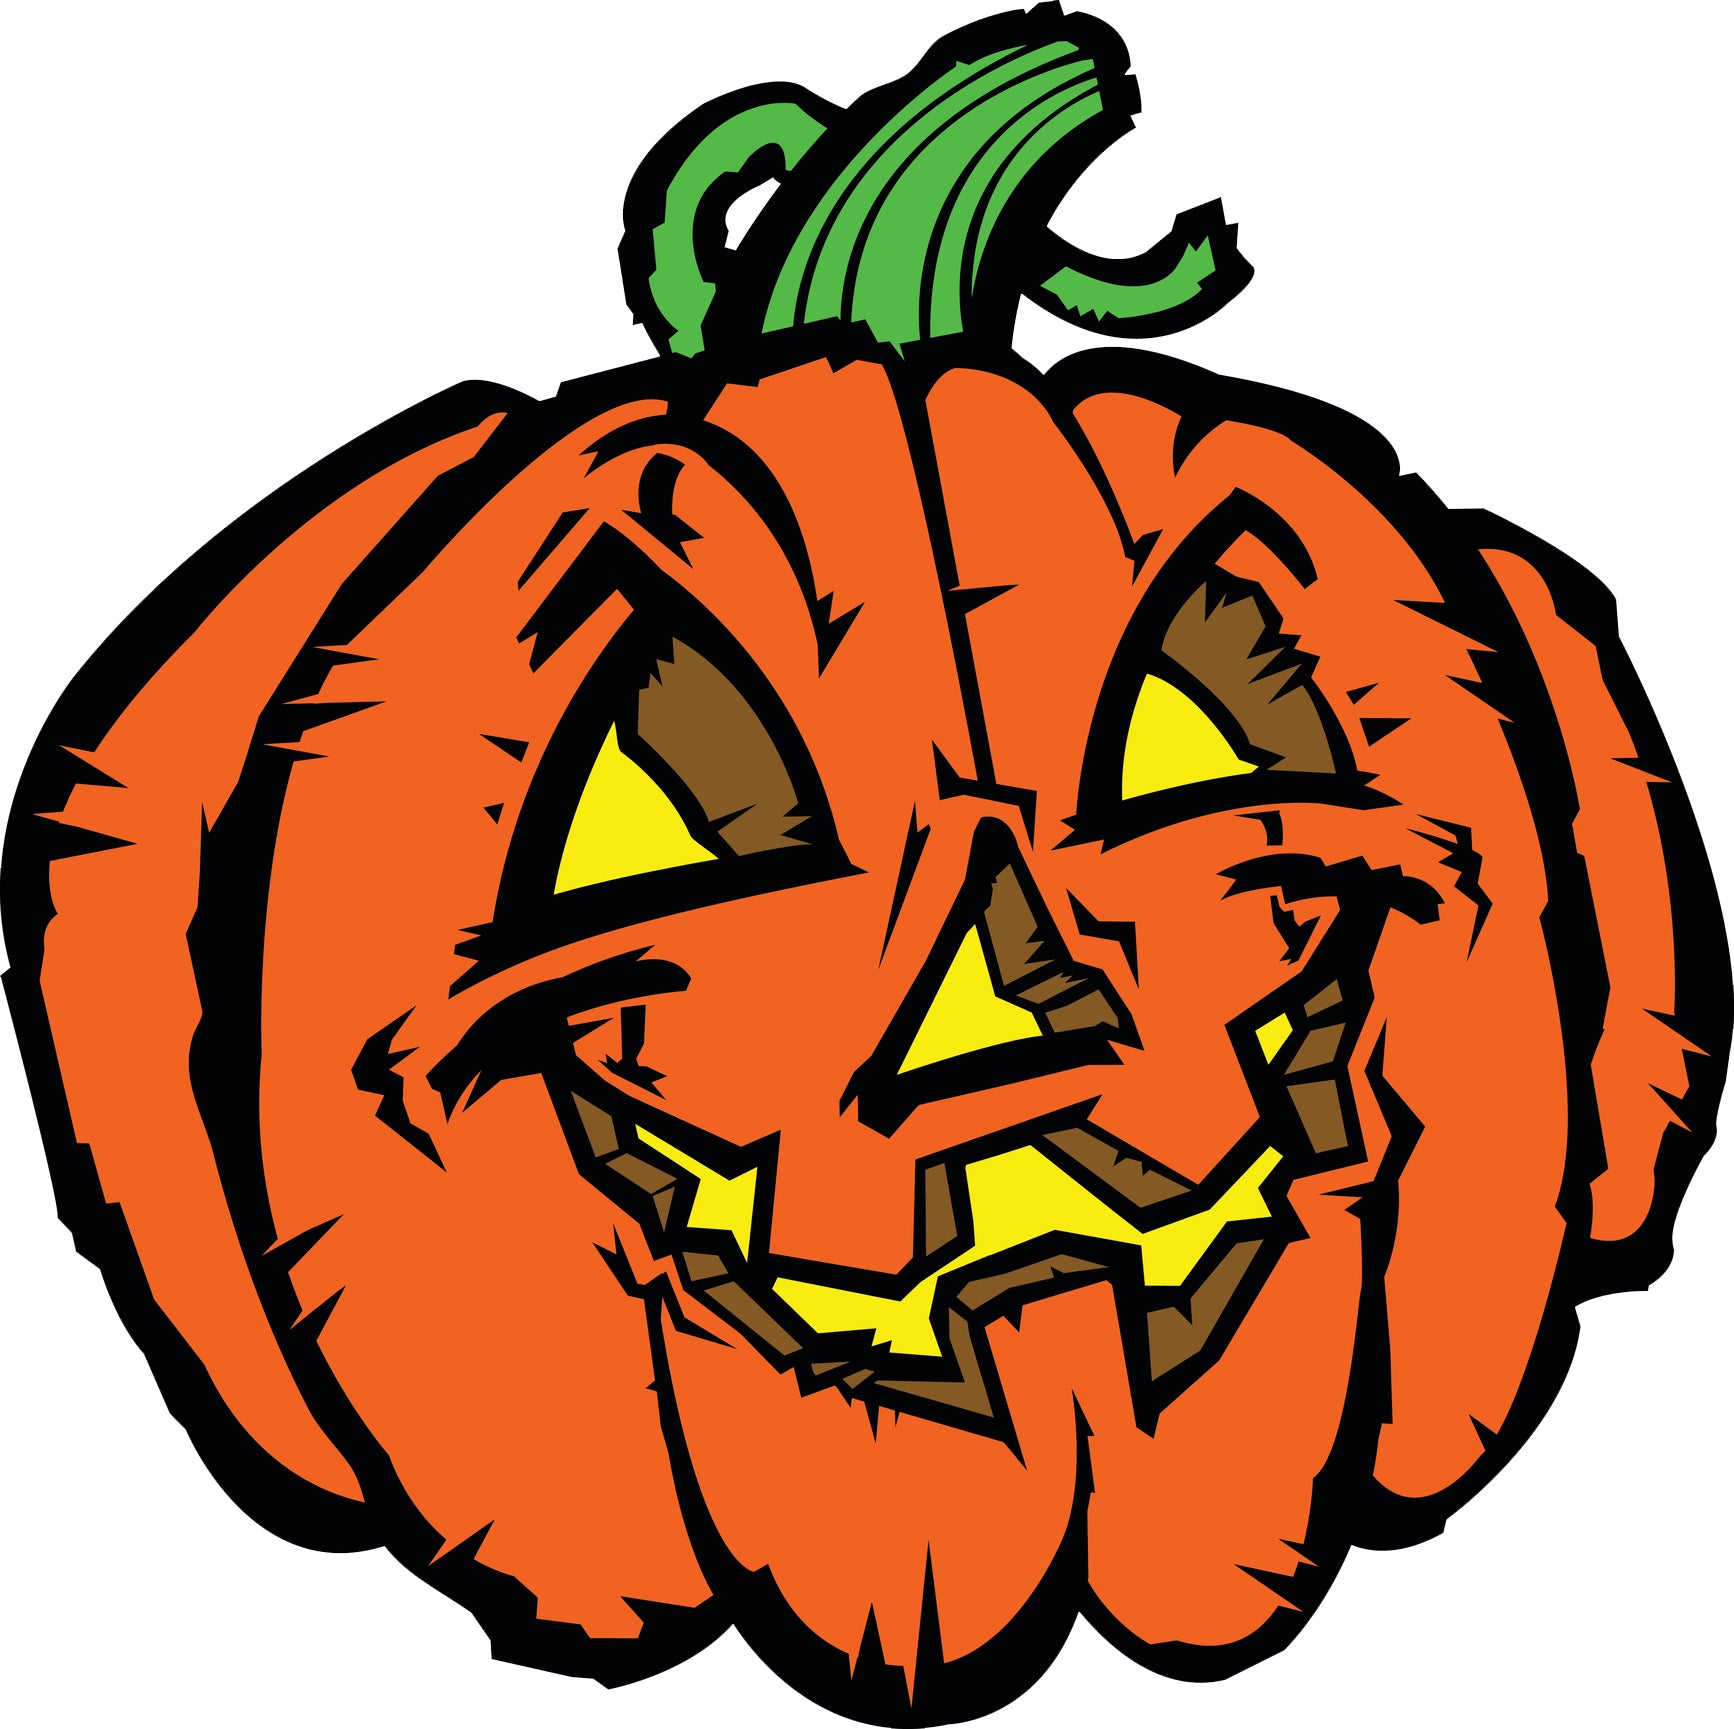 Creepy Smiling Jack O Lantern Halloween Pumpkin Cartoon Vinyl Decal Sticker